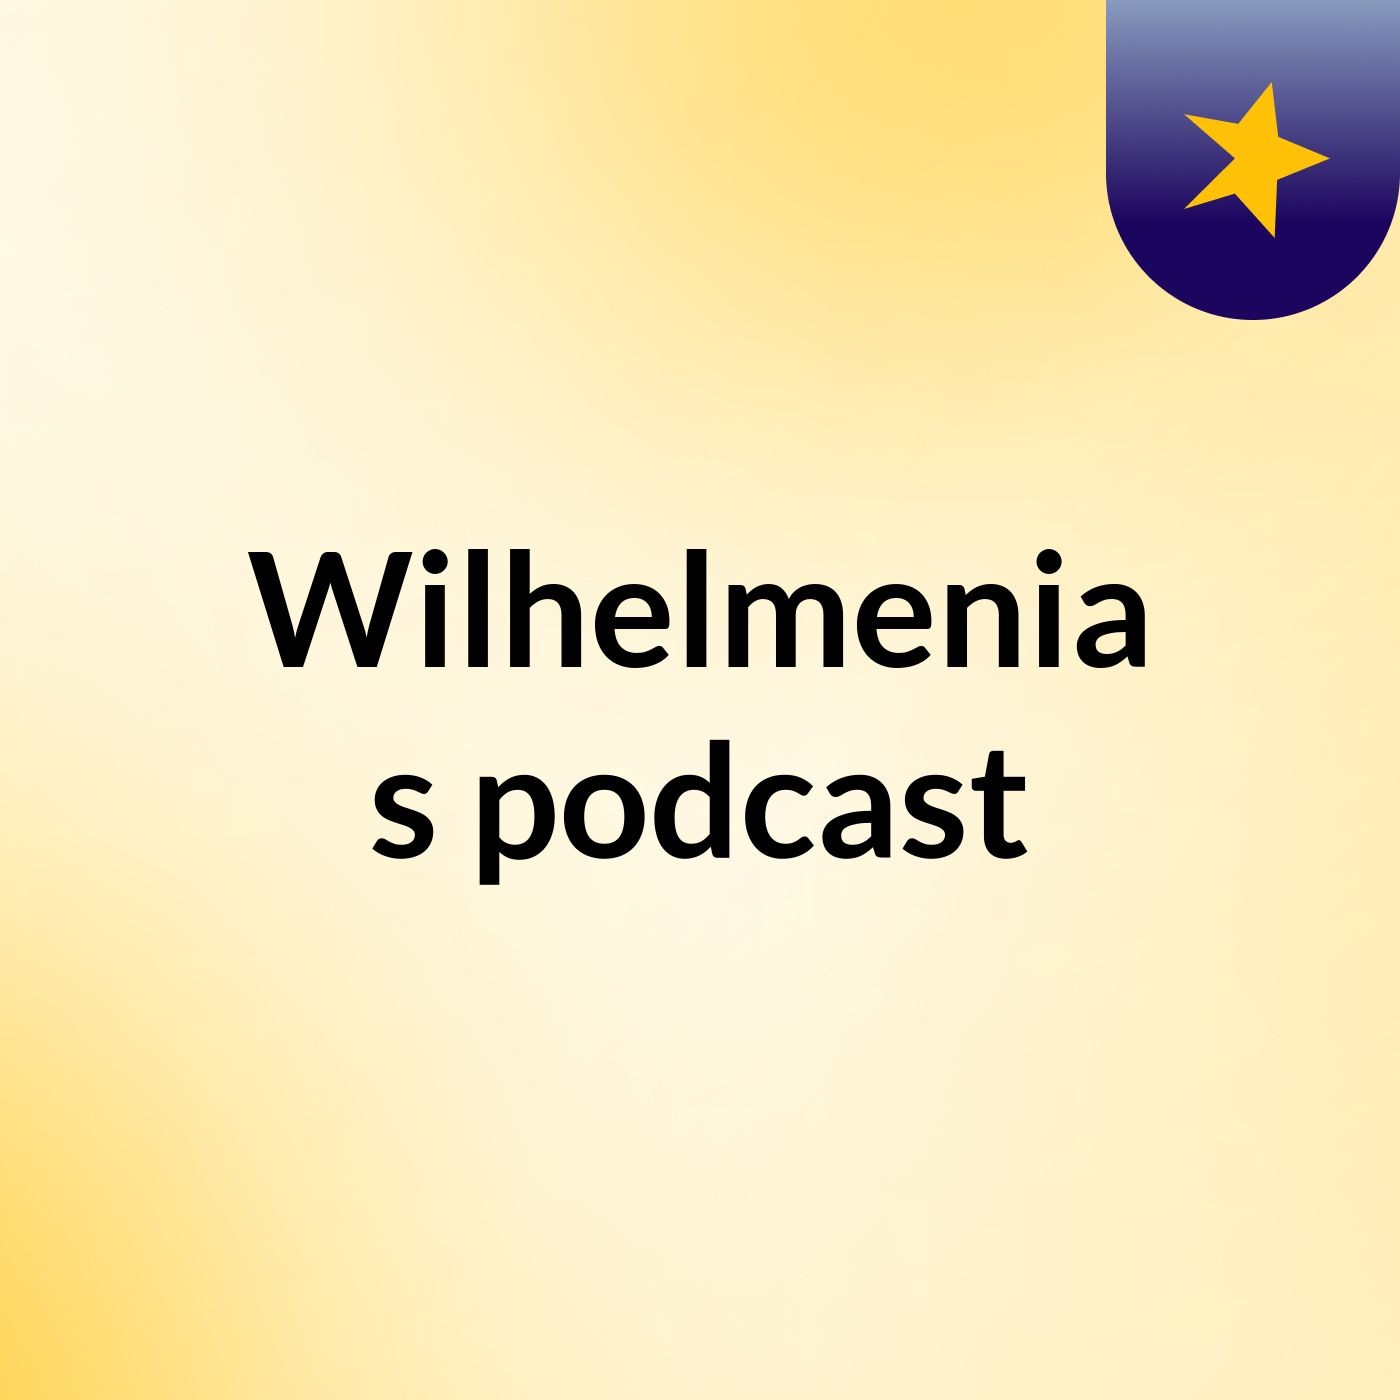 Wilhelmenia's podcast